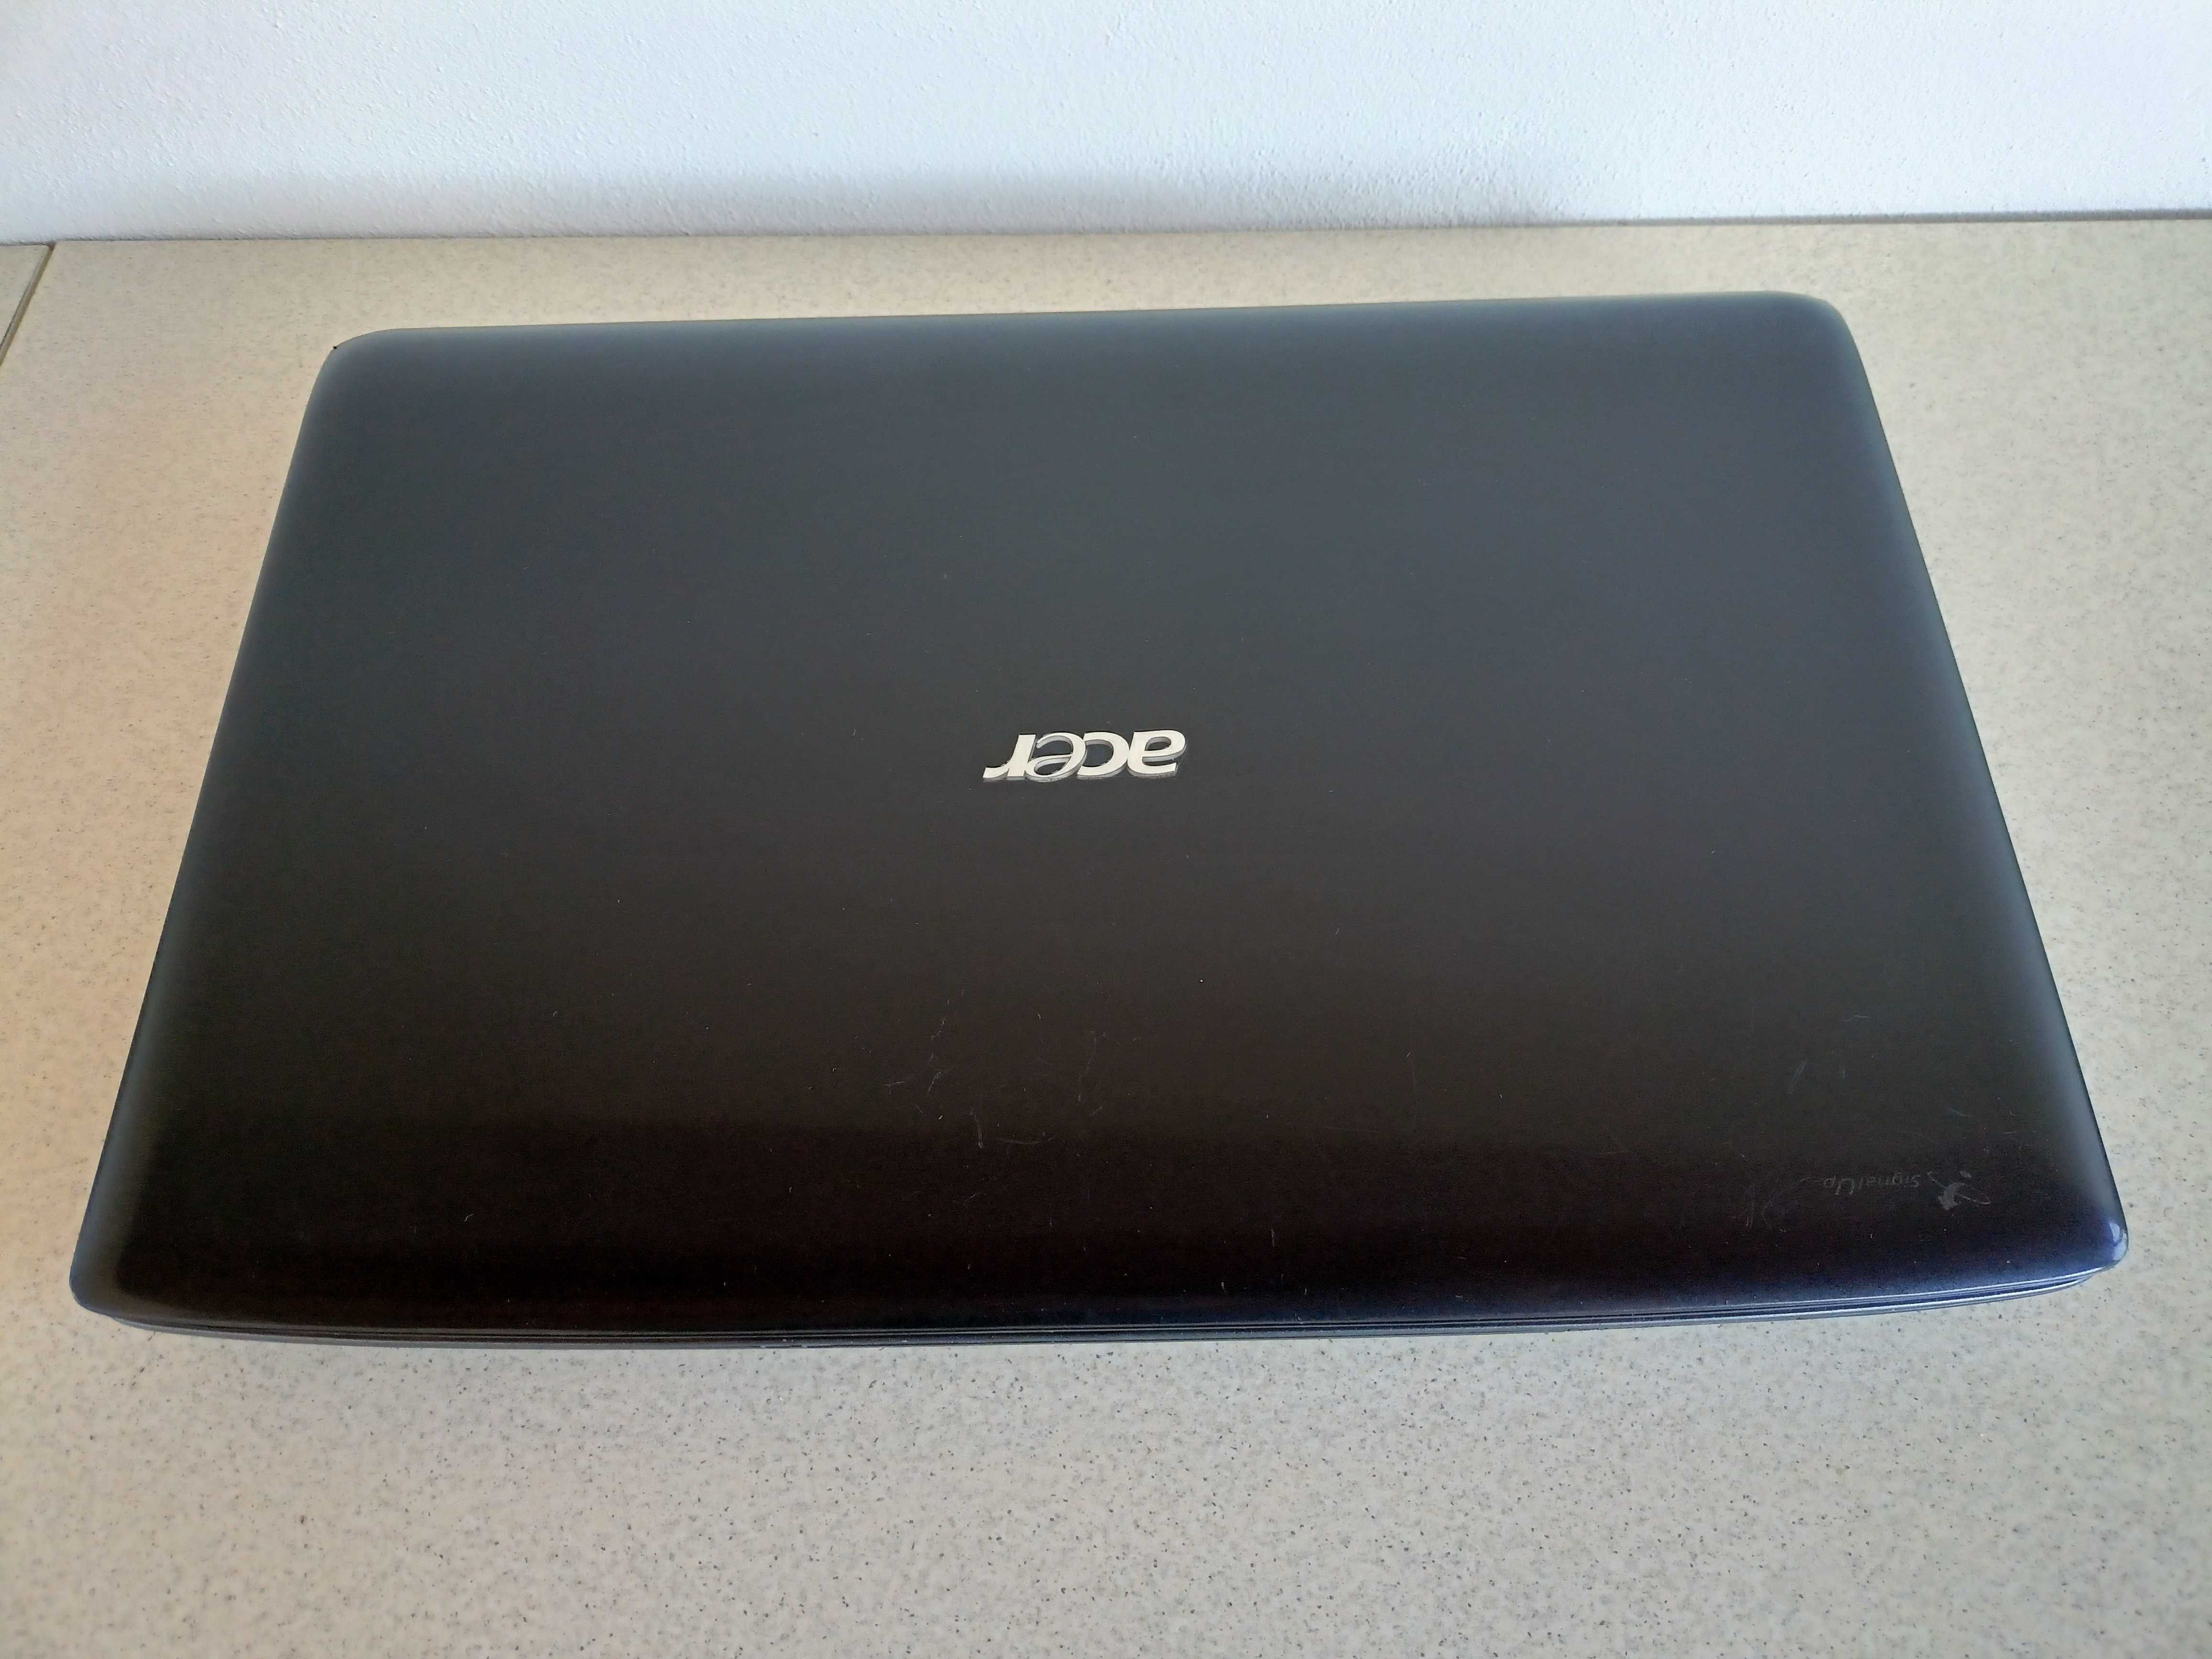 Laptop Acer 8930 display 18,4 ram 4ddr3 Proc T6500 Nvidia 9600m (1gb)